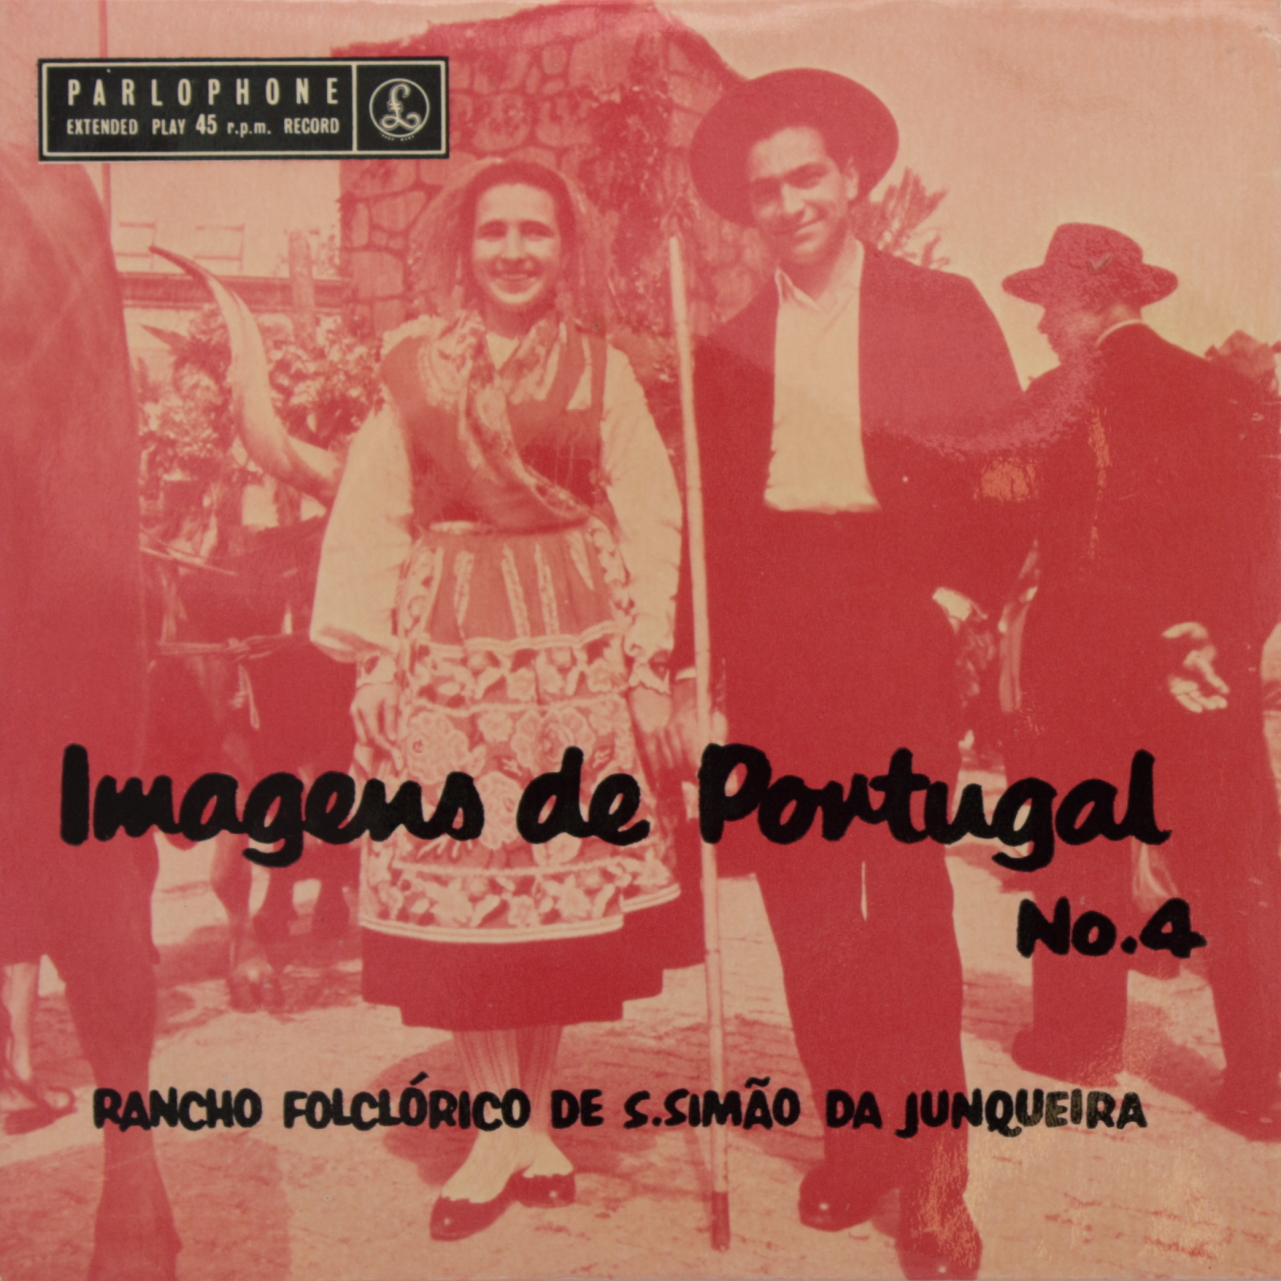 Imagens de Portugal Nº 4